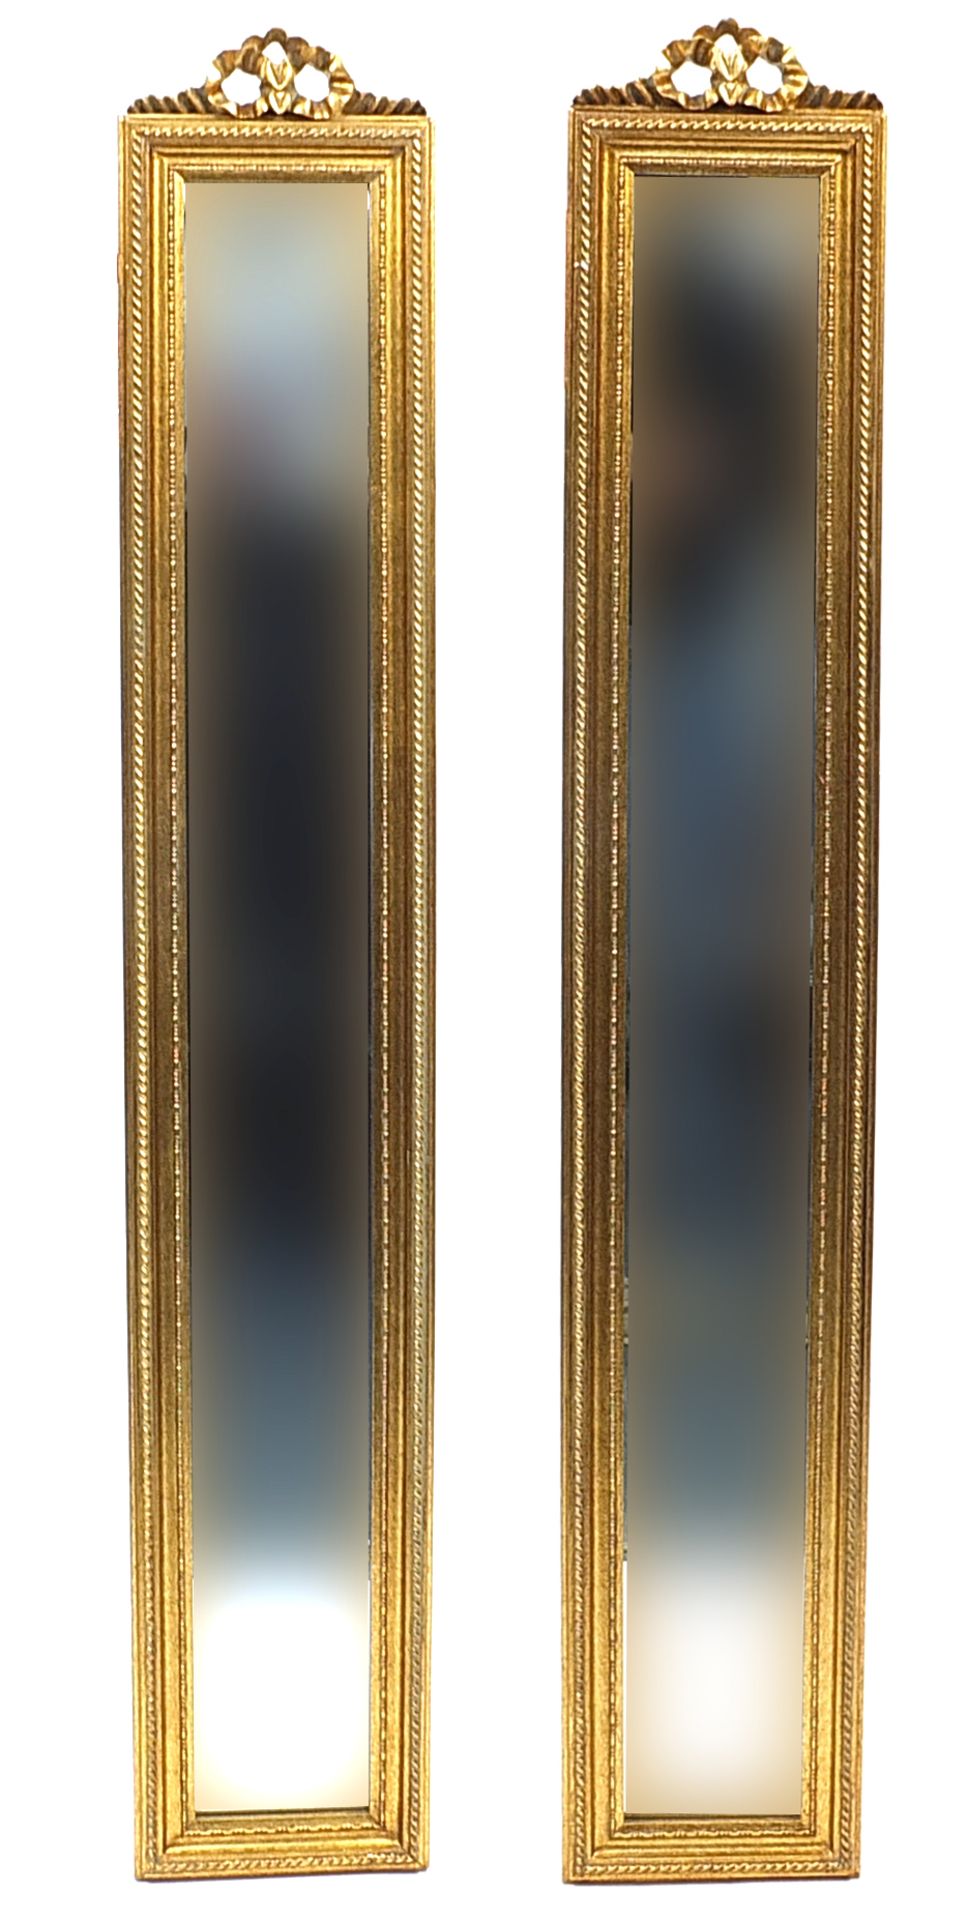 Pair of rectangular gilt framed mirrors with bevelled glass, each 121cm x 20cm